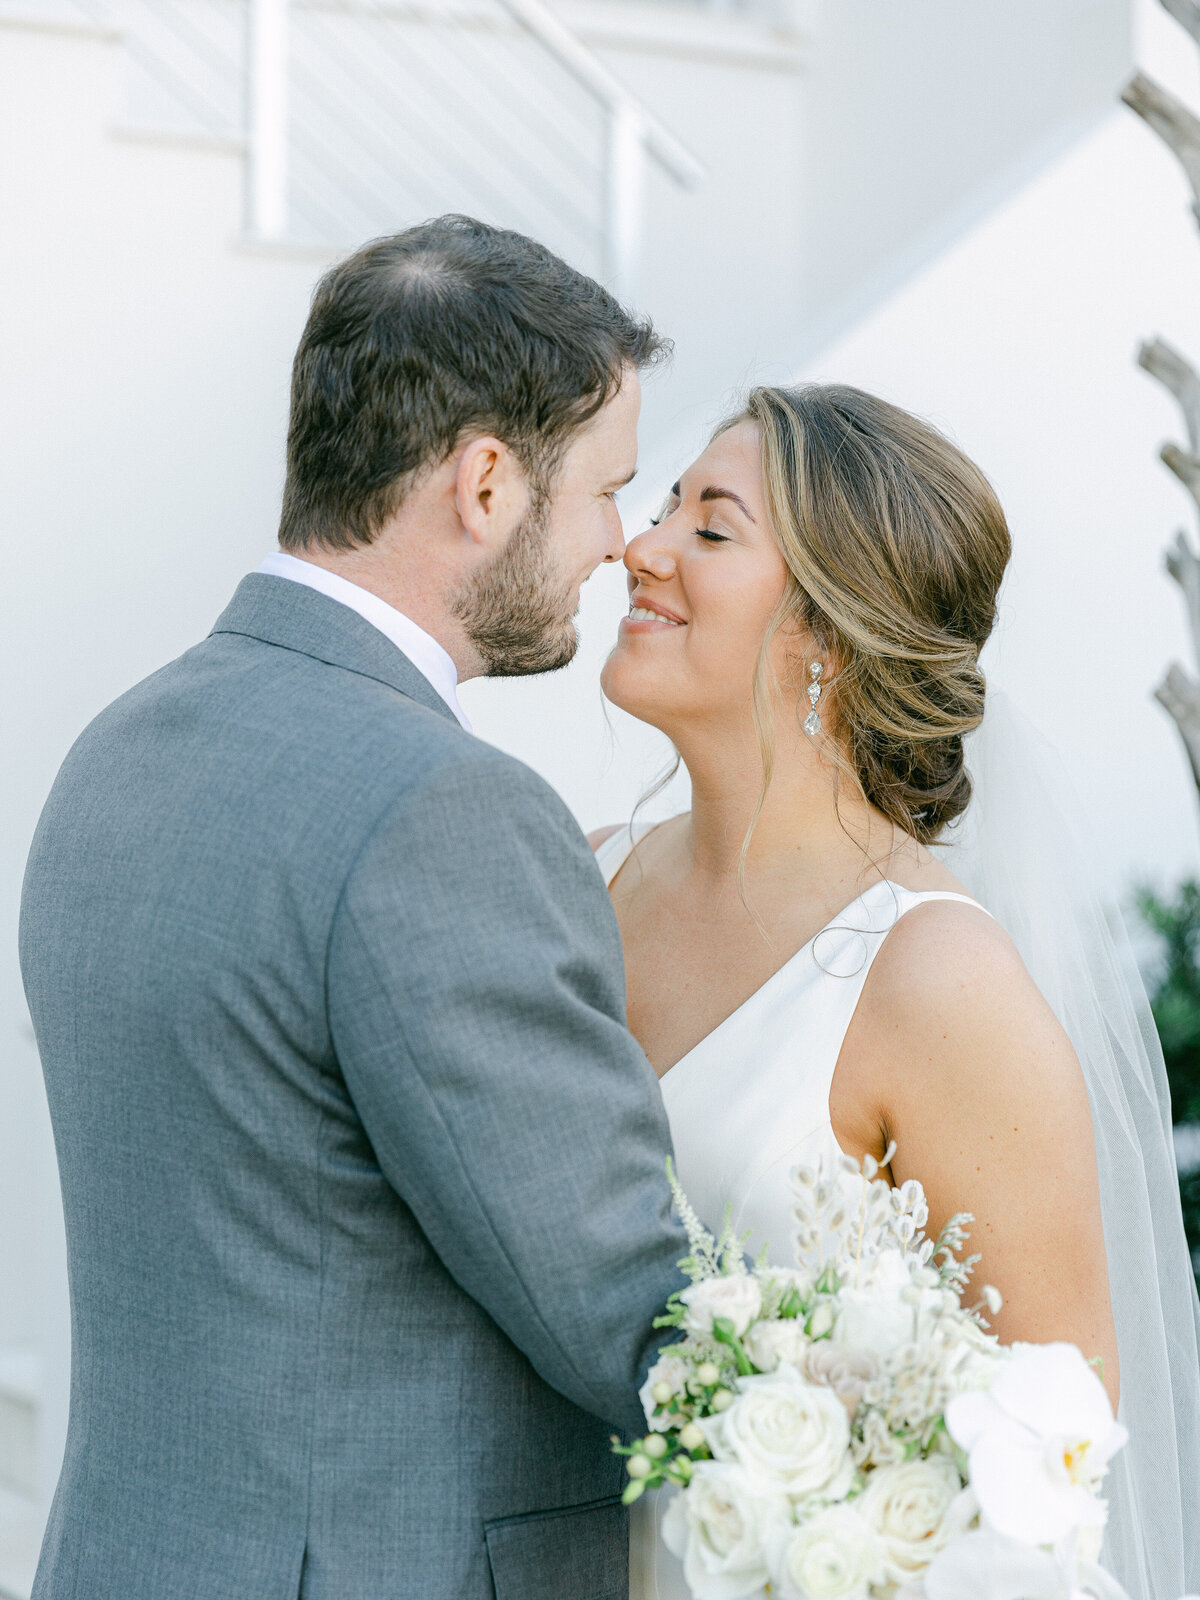 Marybeth and Ryan - Destin Florida Wedding Photographer - Darian Reilly Photography-32